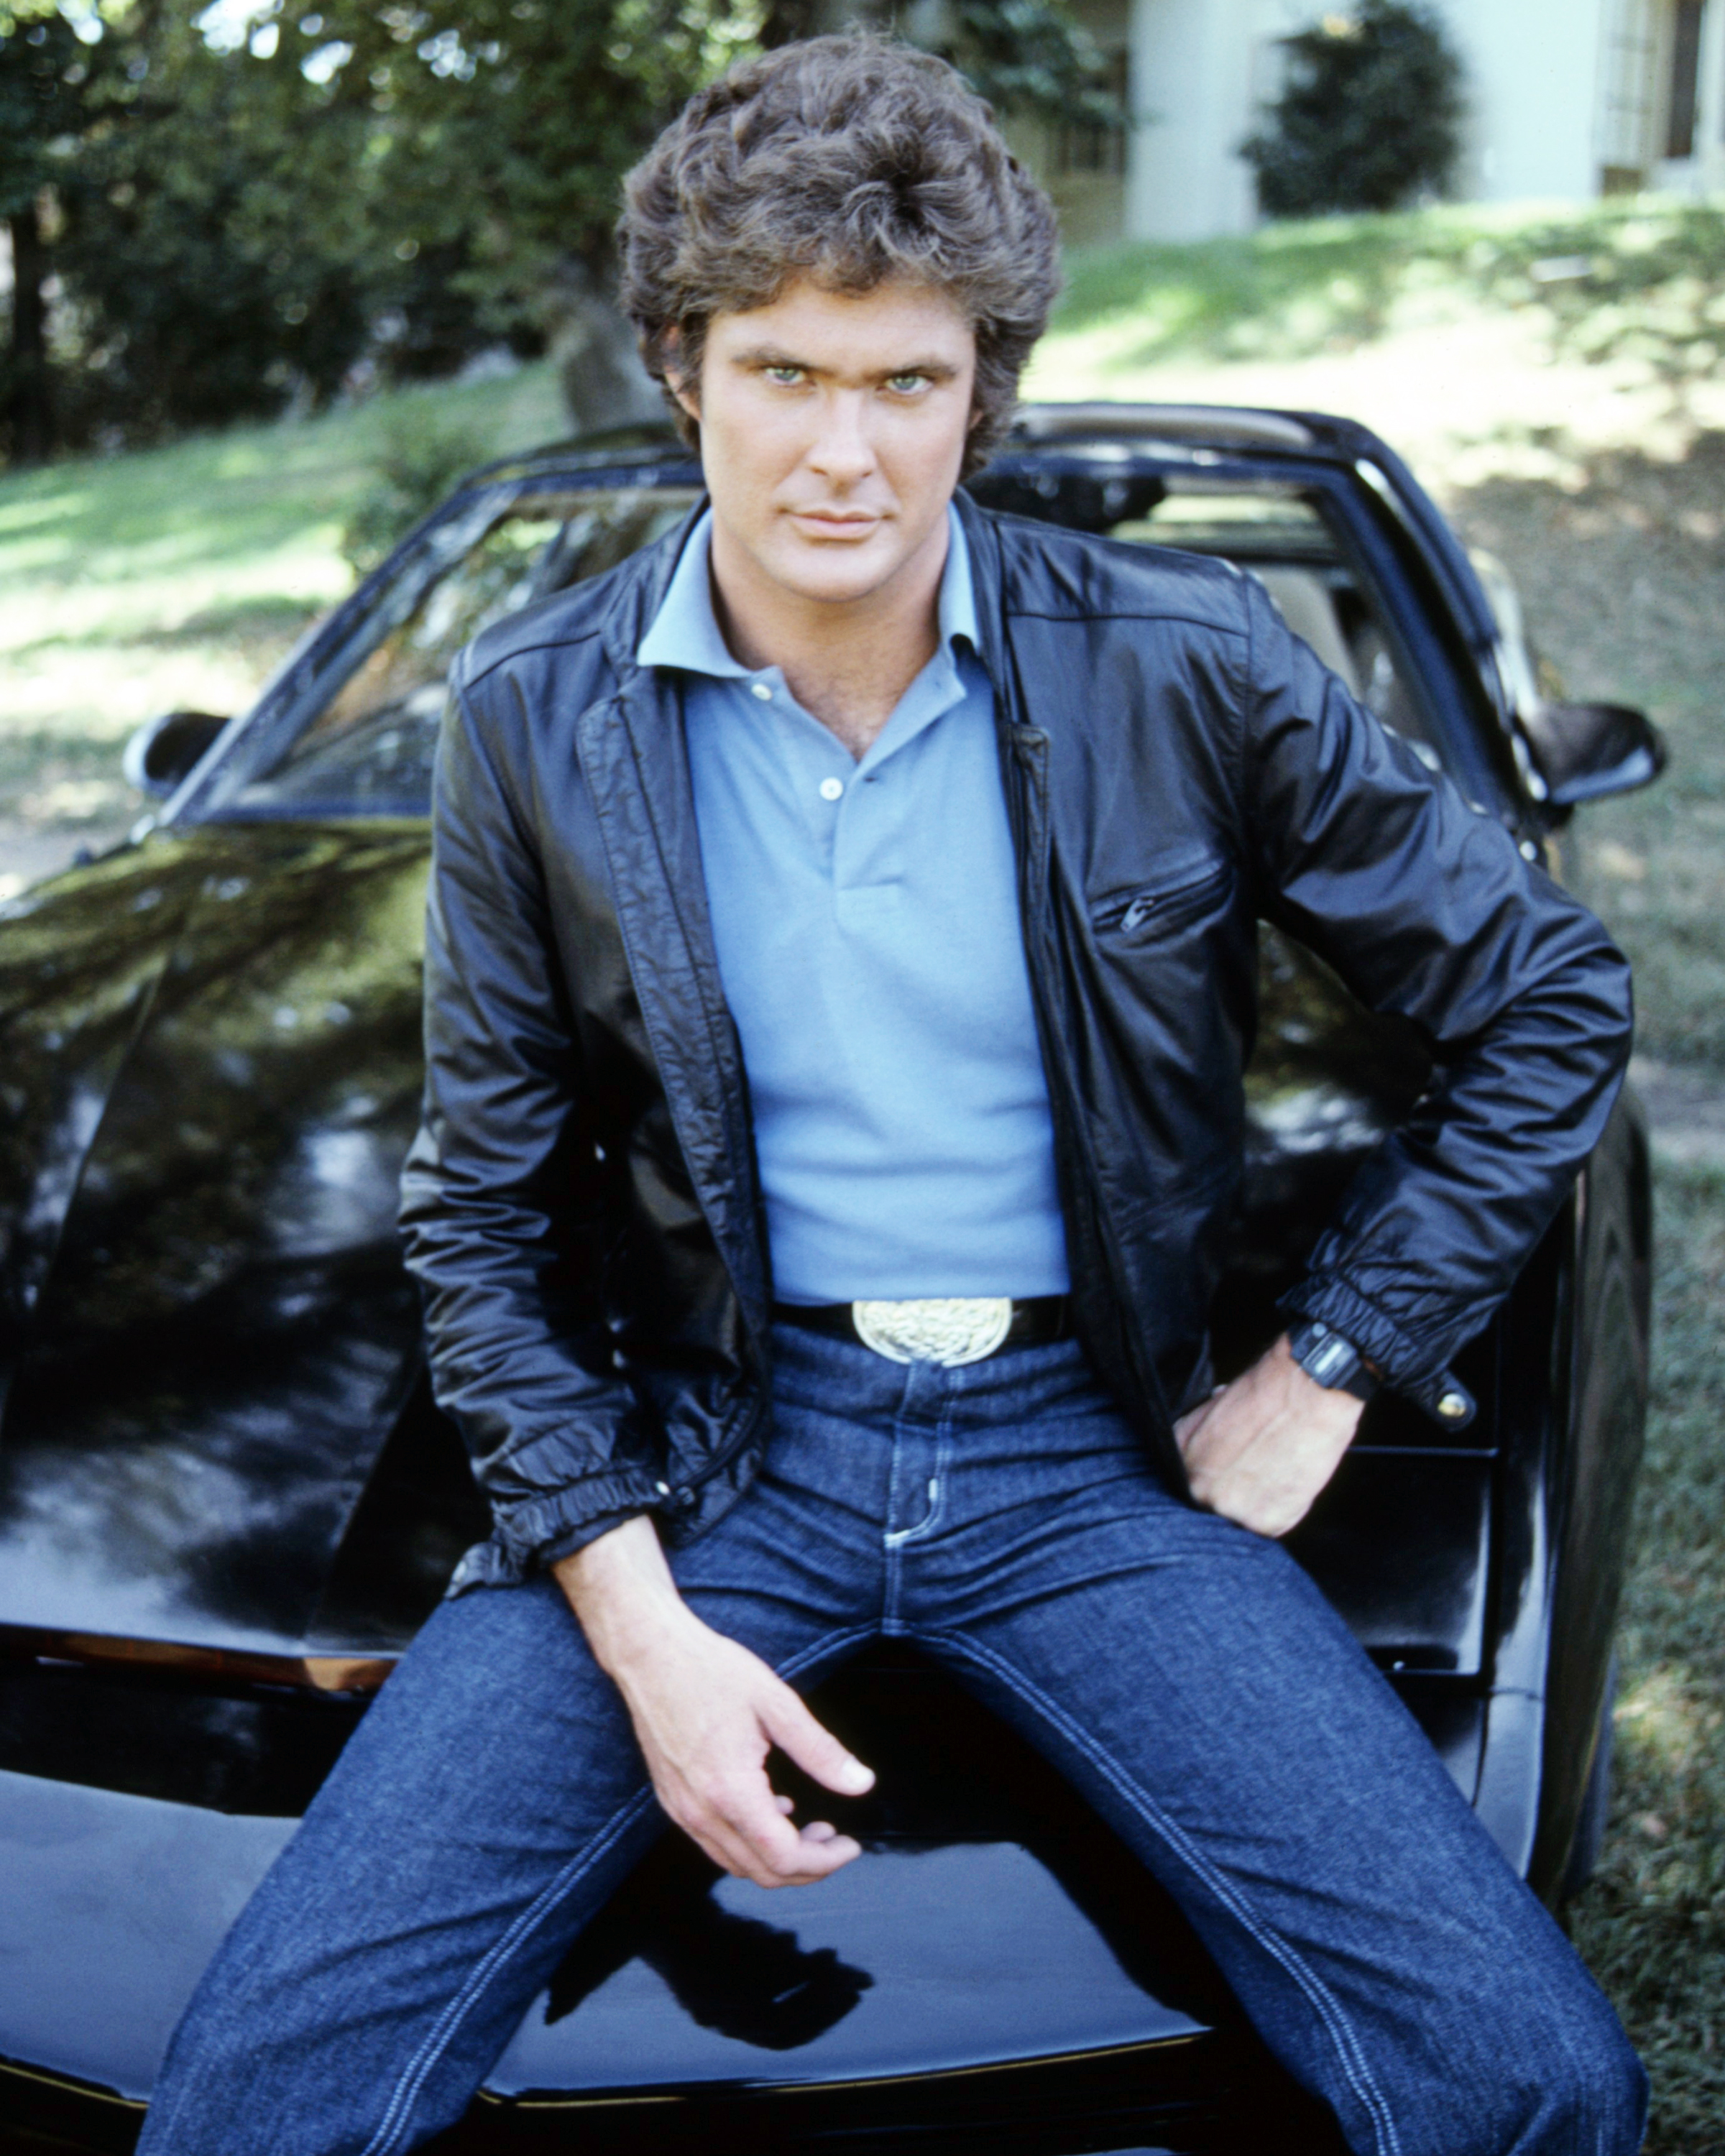 David Hasselhoff, dans "Knight Rider" en 1983 | Source : Getty Images